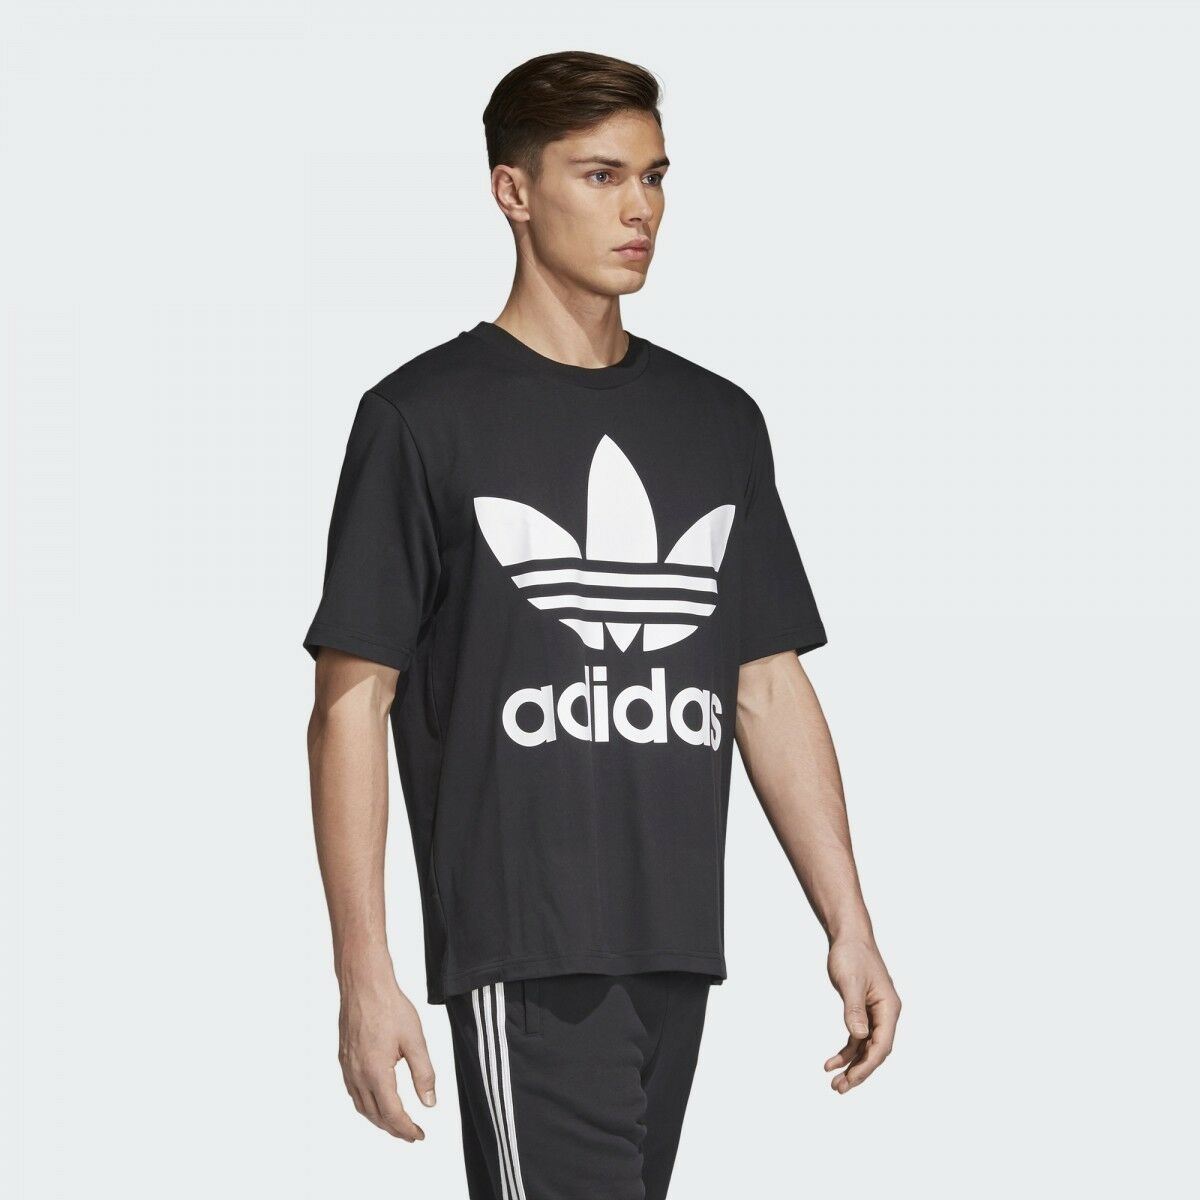 Adidas Originals Oversized Tee Trefoil Black White T-Shirt New Men CW1211 |  eBay